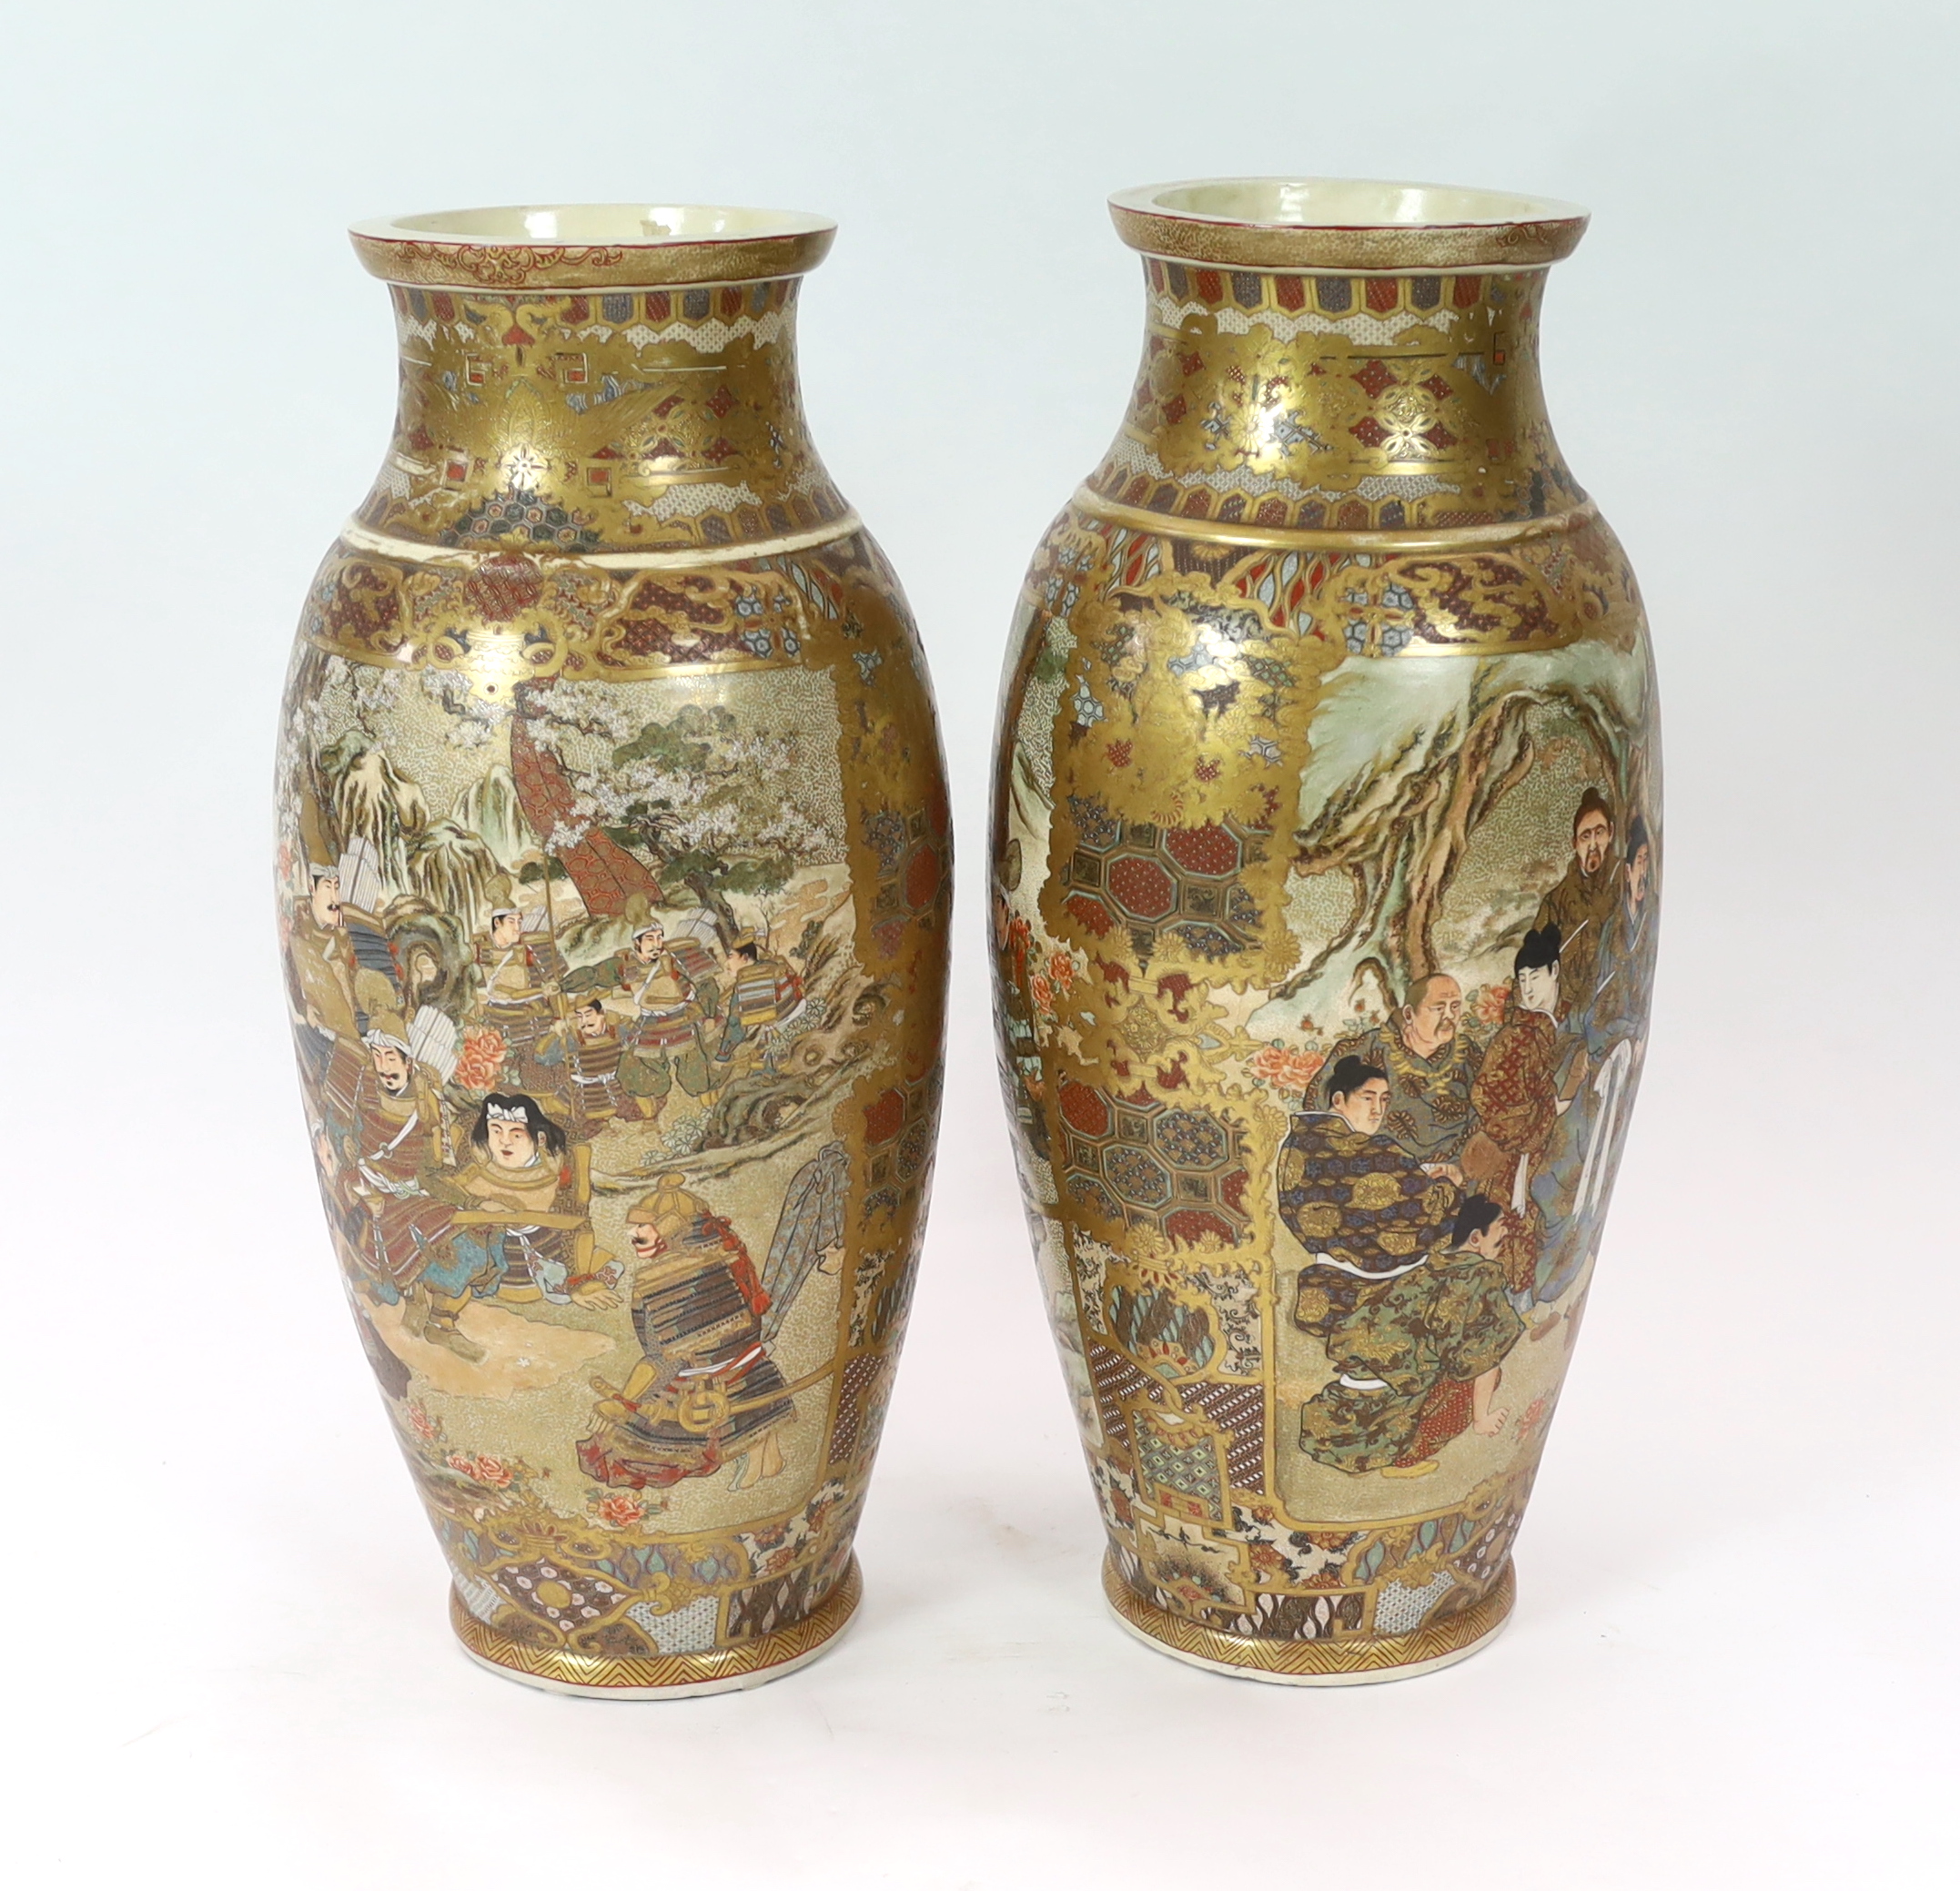 A pair of large Japanese Satsuma pottery 'Samurai' vases, Meiji period, one vase restored